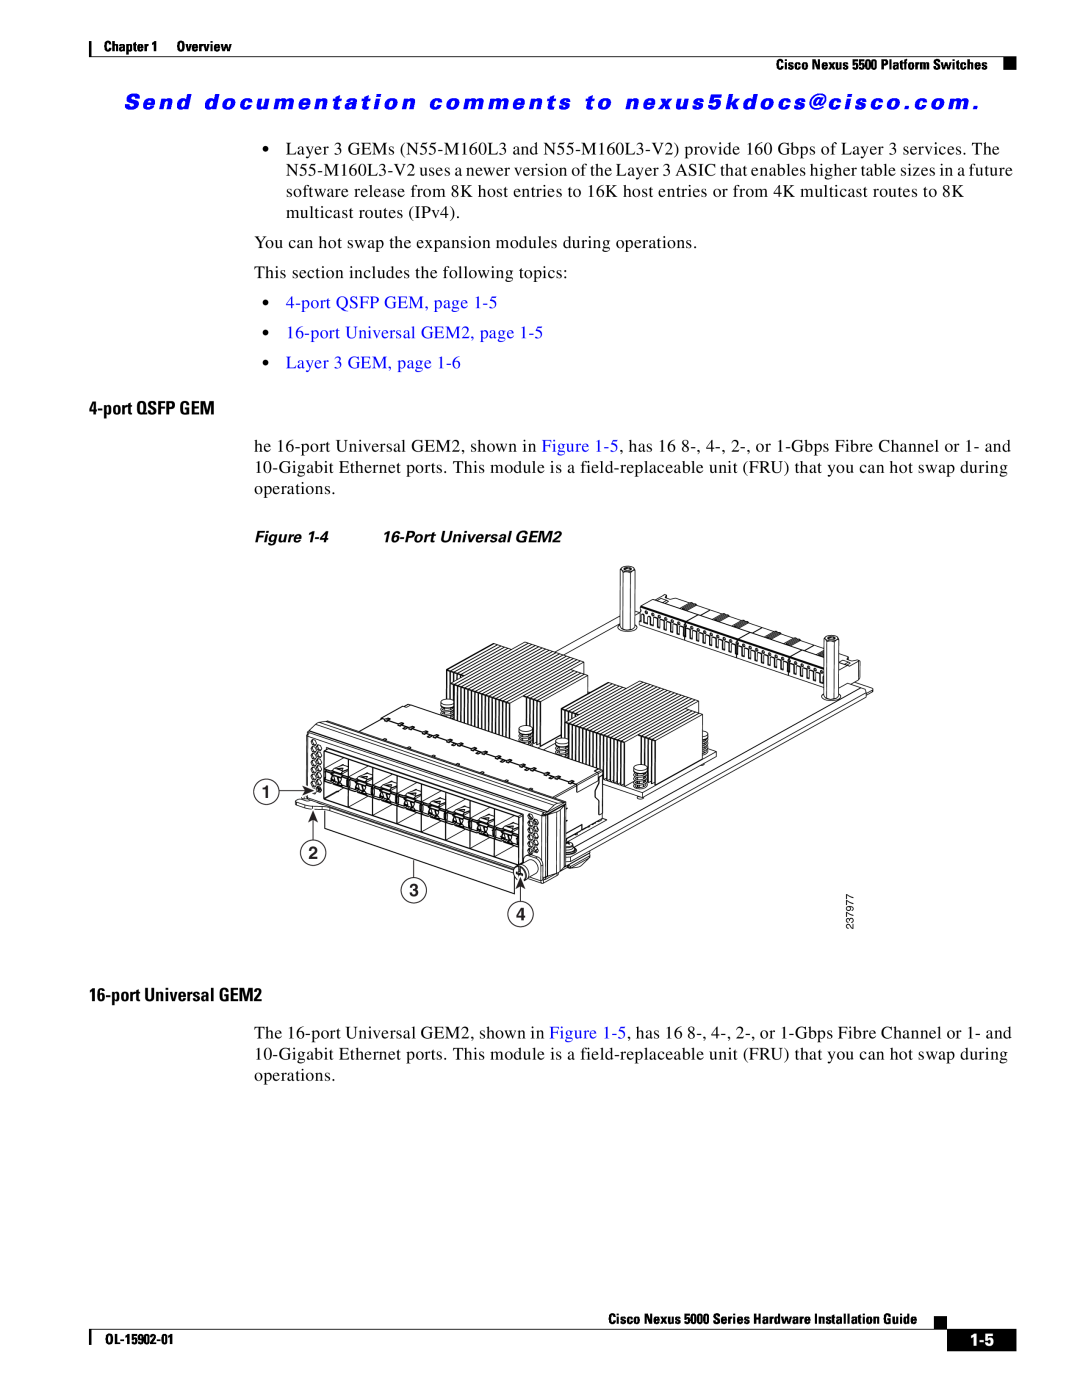 Cisco Systems 5000 manual port QSFP GEM, page 16-port Universal GEM2, page Layer 3 GEM, page 